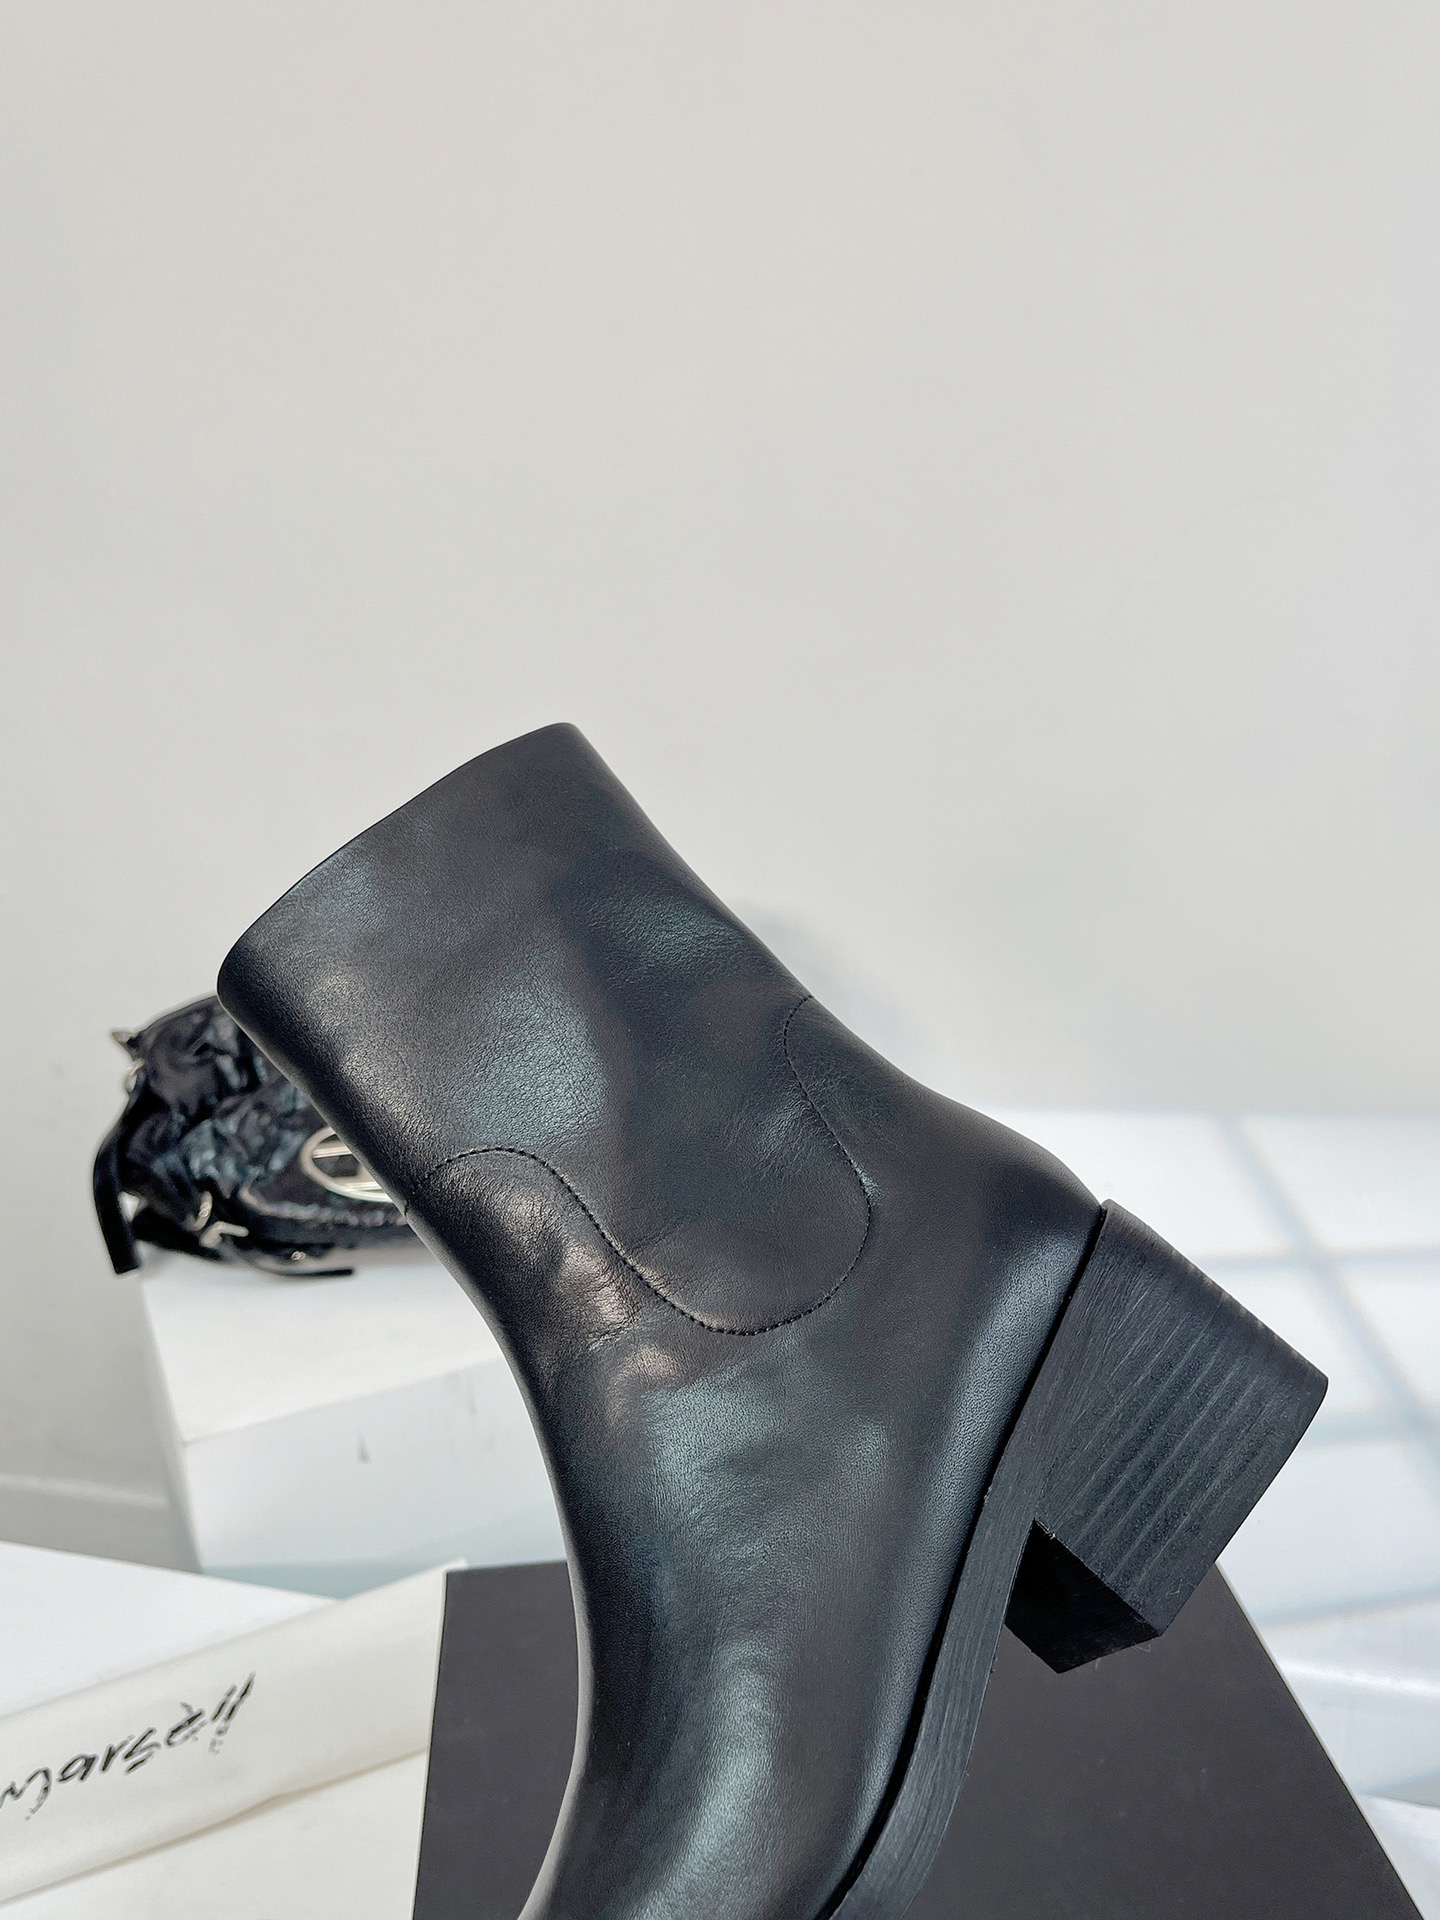 Marsell马赛尔2023秋冬厚底切尔西暗黑靴爆款独家首发意大利威尼斯小众时尚鞋履品牌他的设计感工艺感